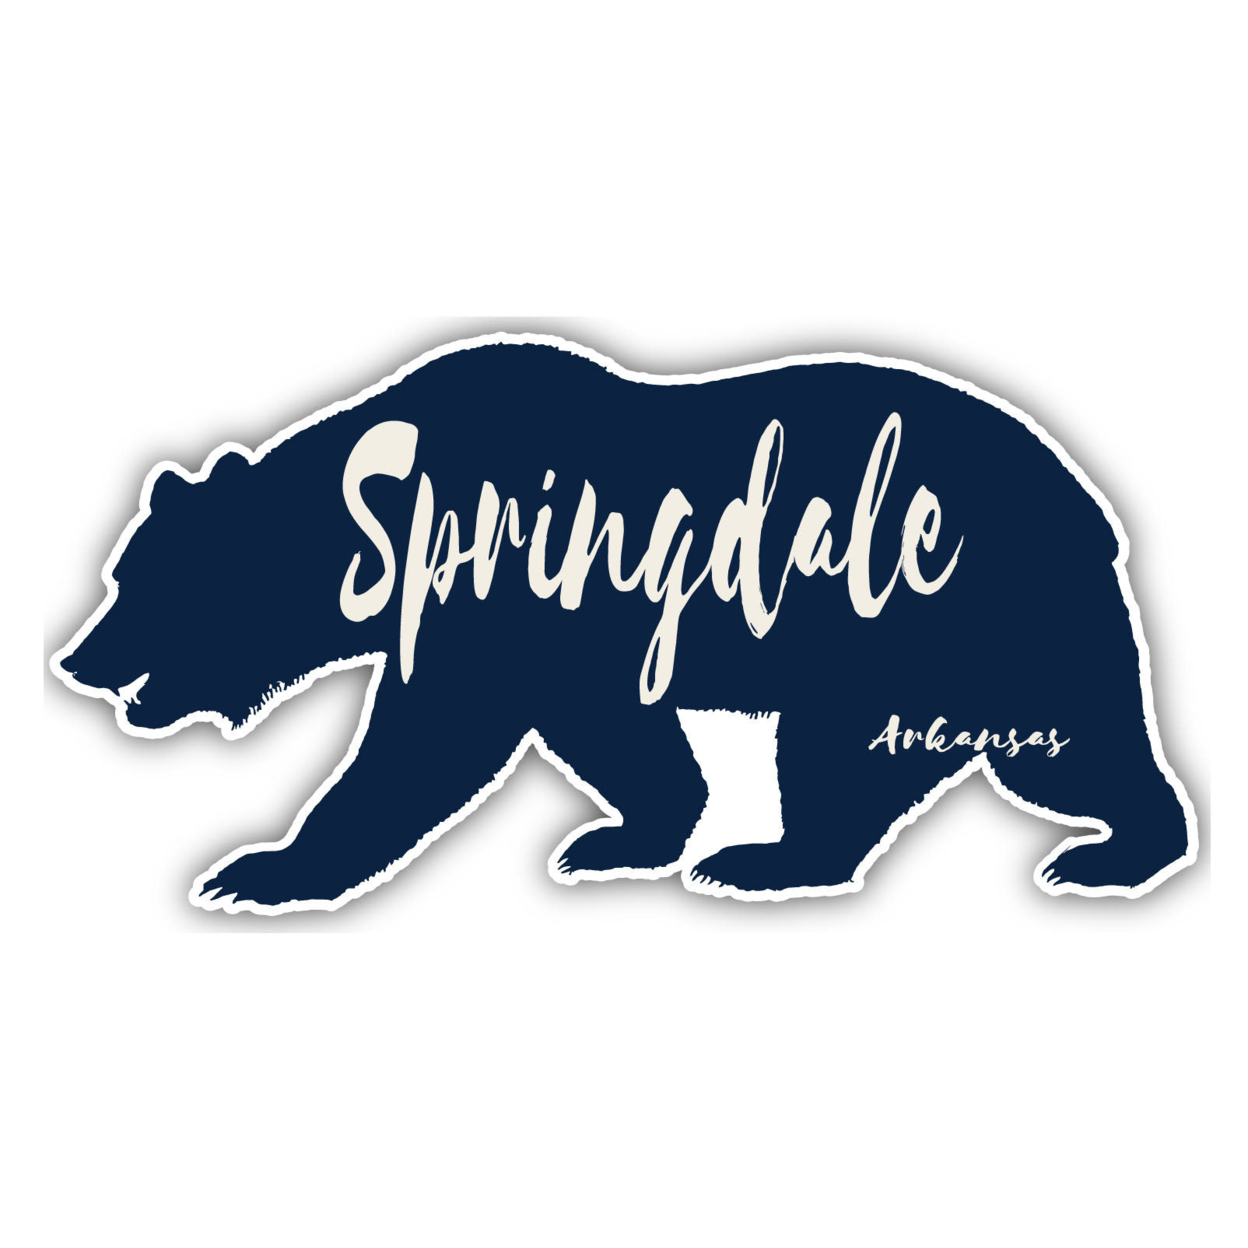 Springdale Arkansas Souvenir Decorative Stickers (Choose Theme And Size) - Single Unit, 2-Inch, Bear